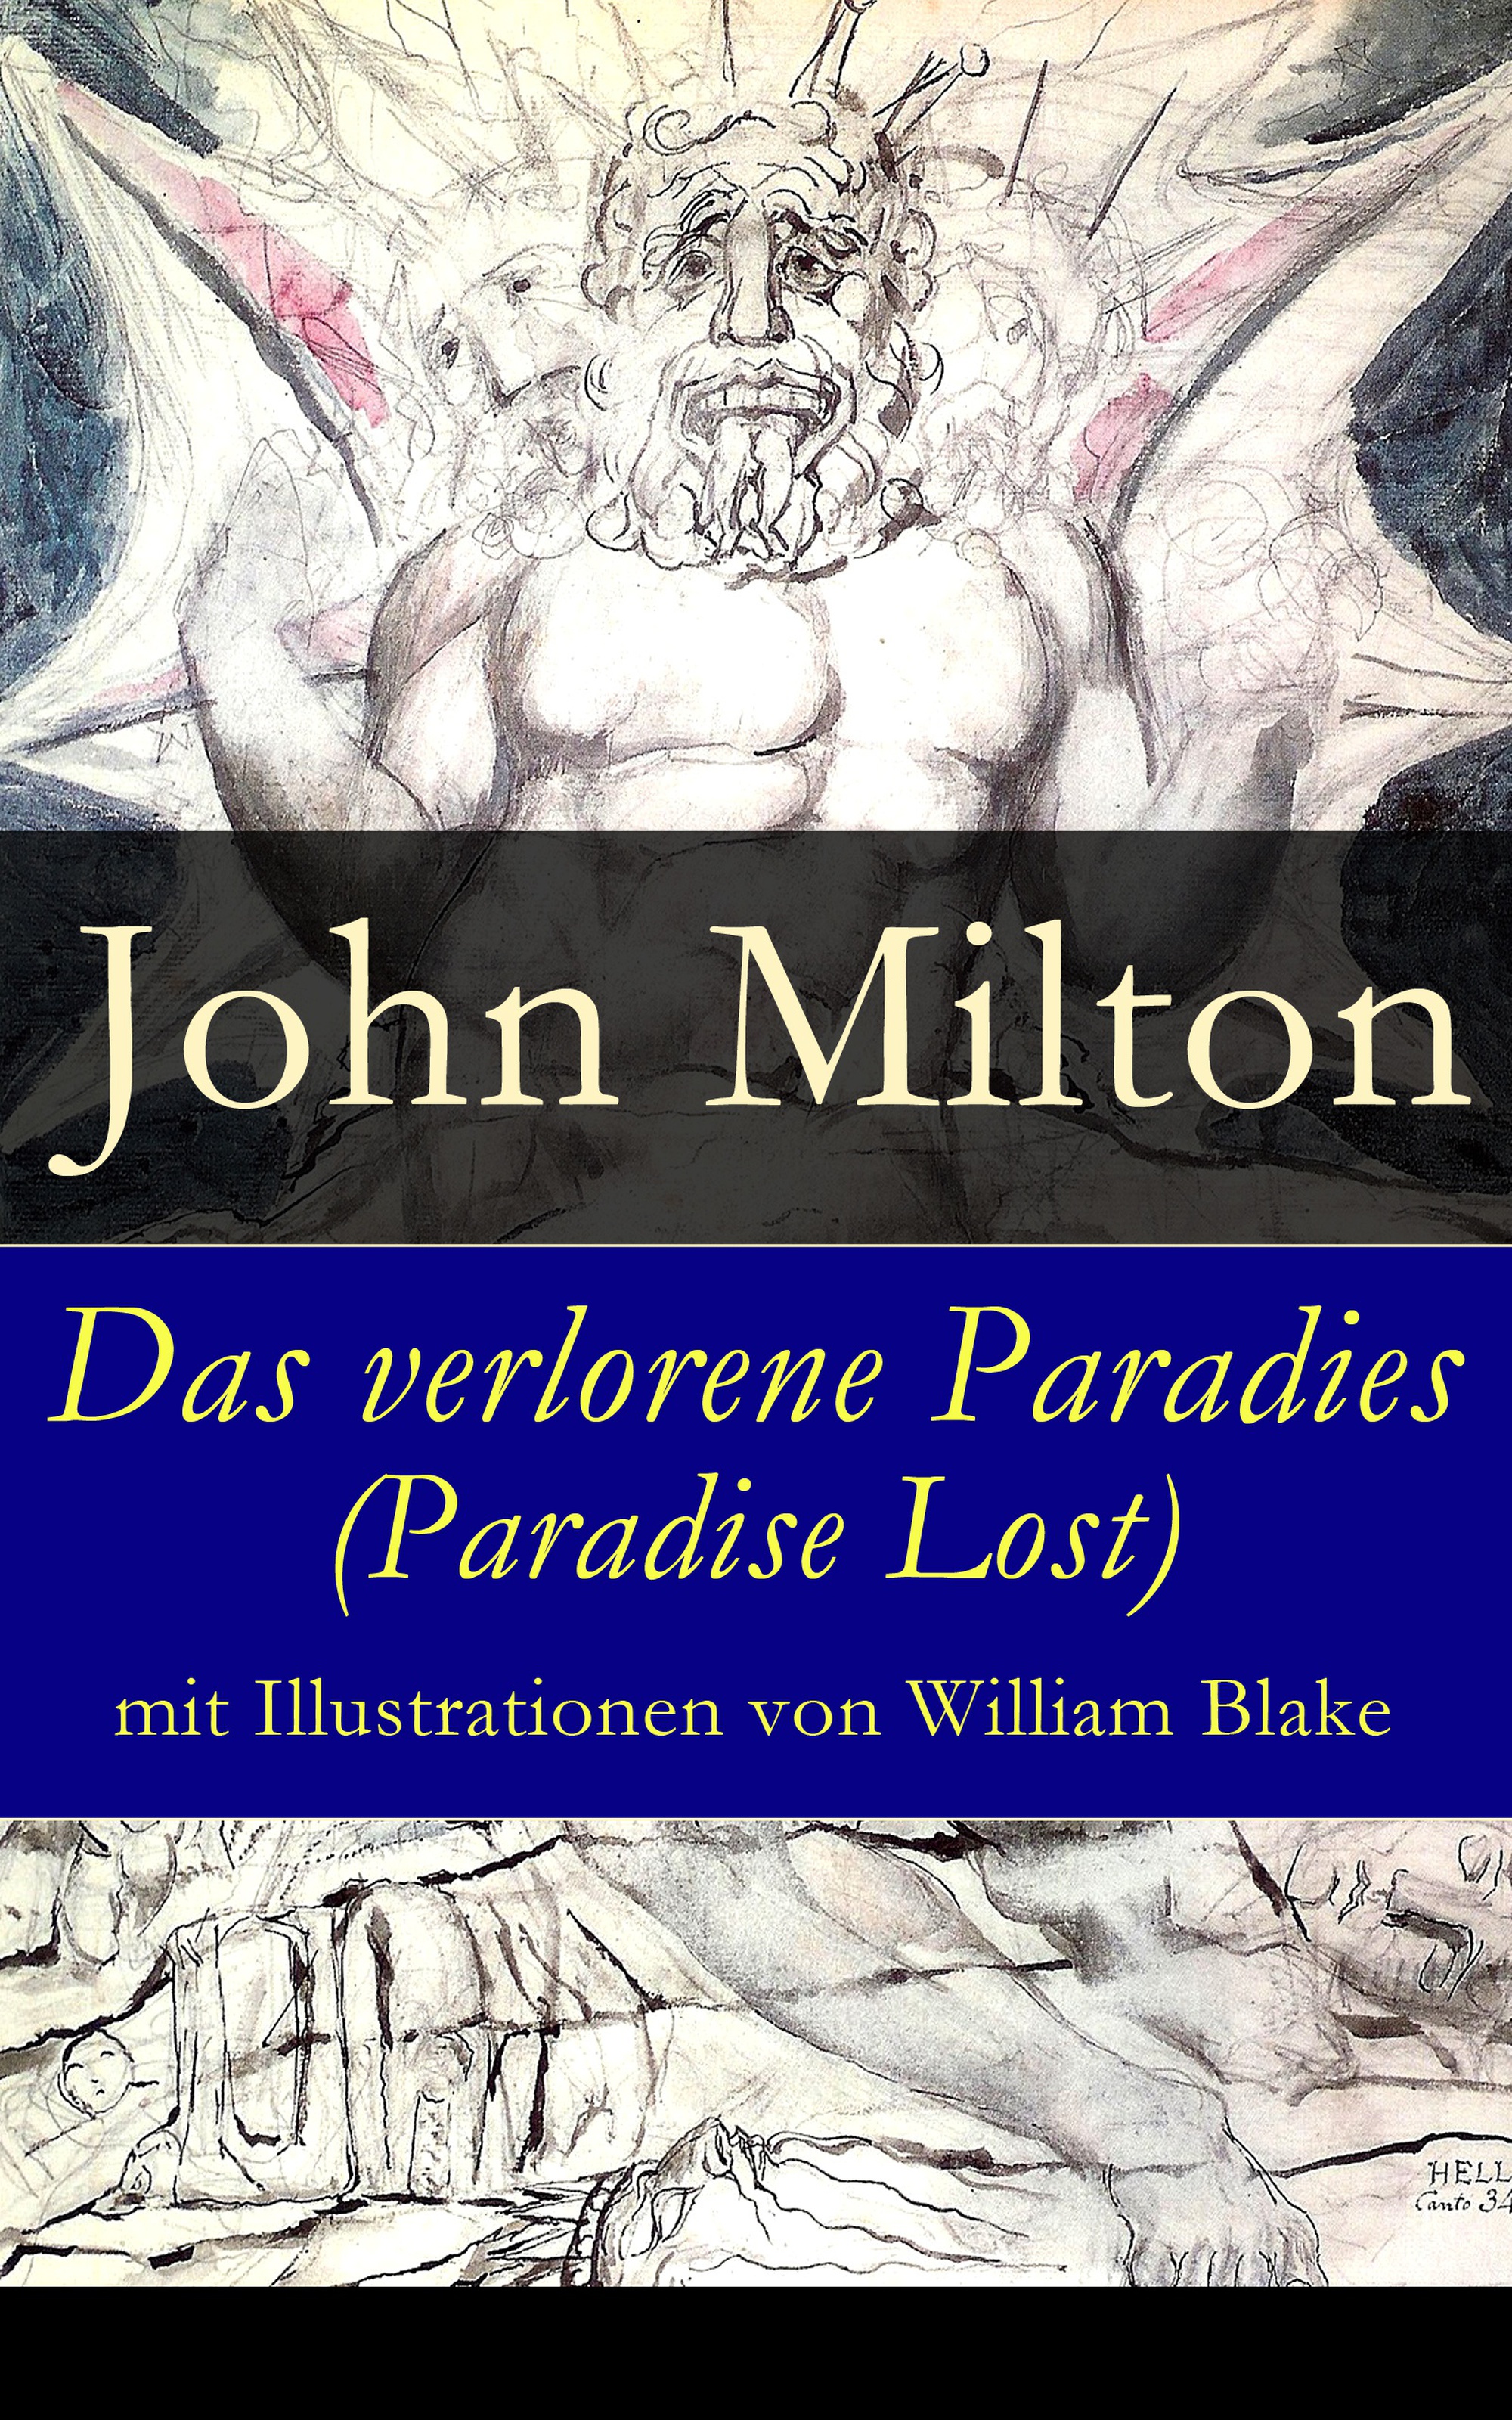 John Laws Milton Das verlorene Paradies (Paradise Lost) mit Illustrationen von William Blake